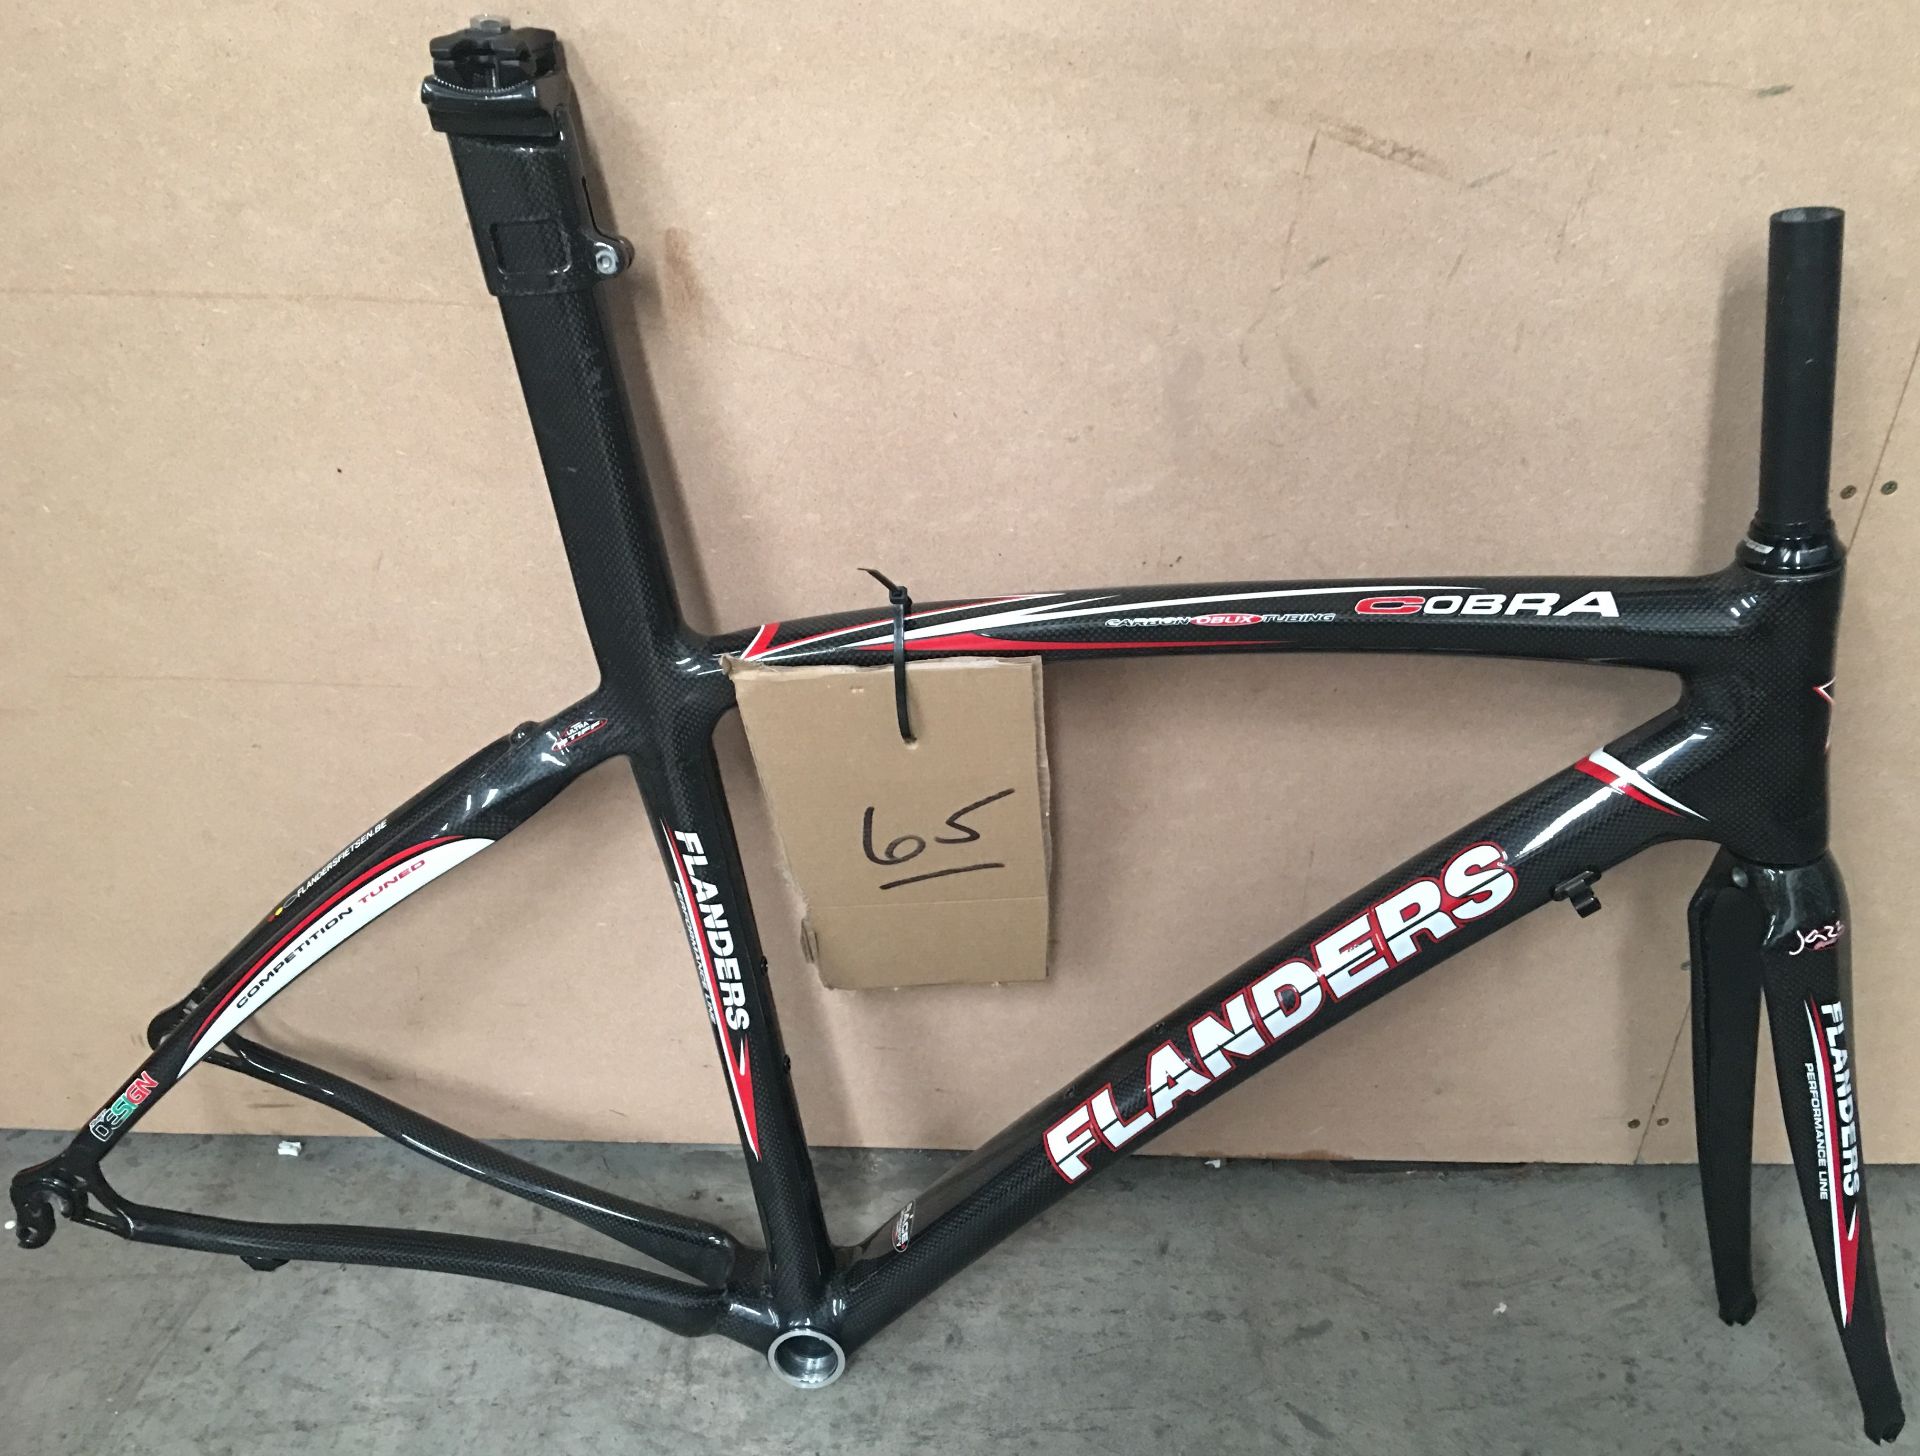 A Flanders Cobra 15" carbon race bike frame with matching front forks